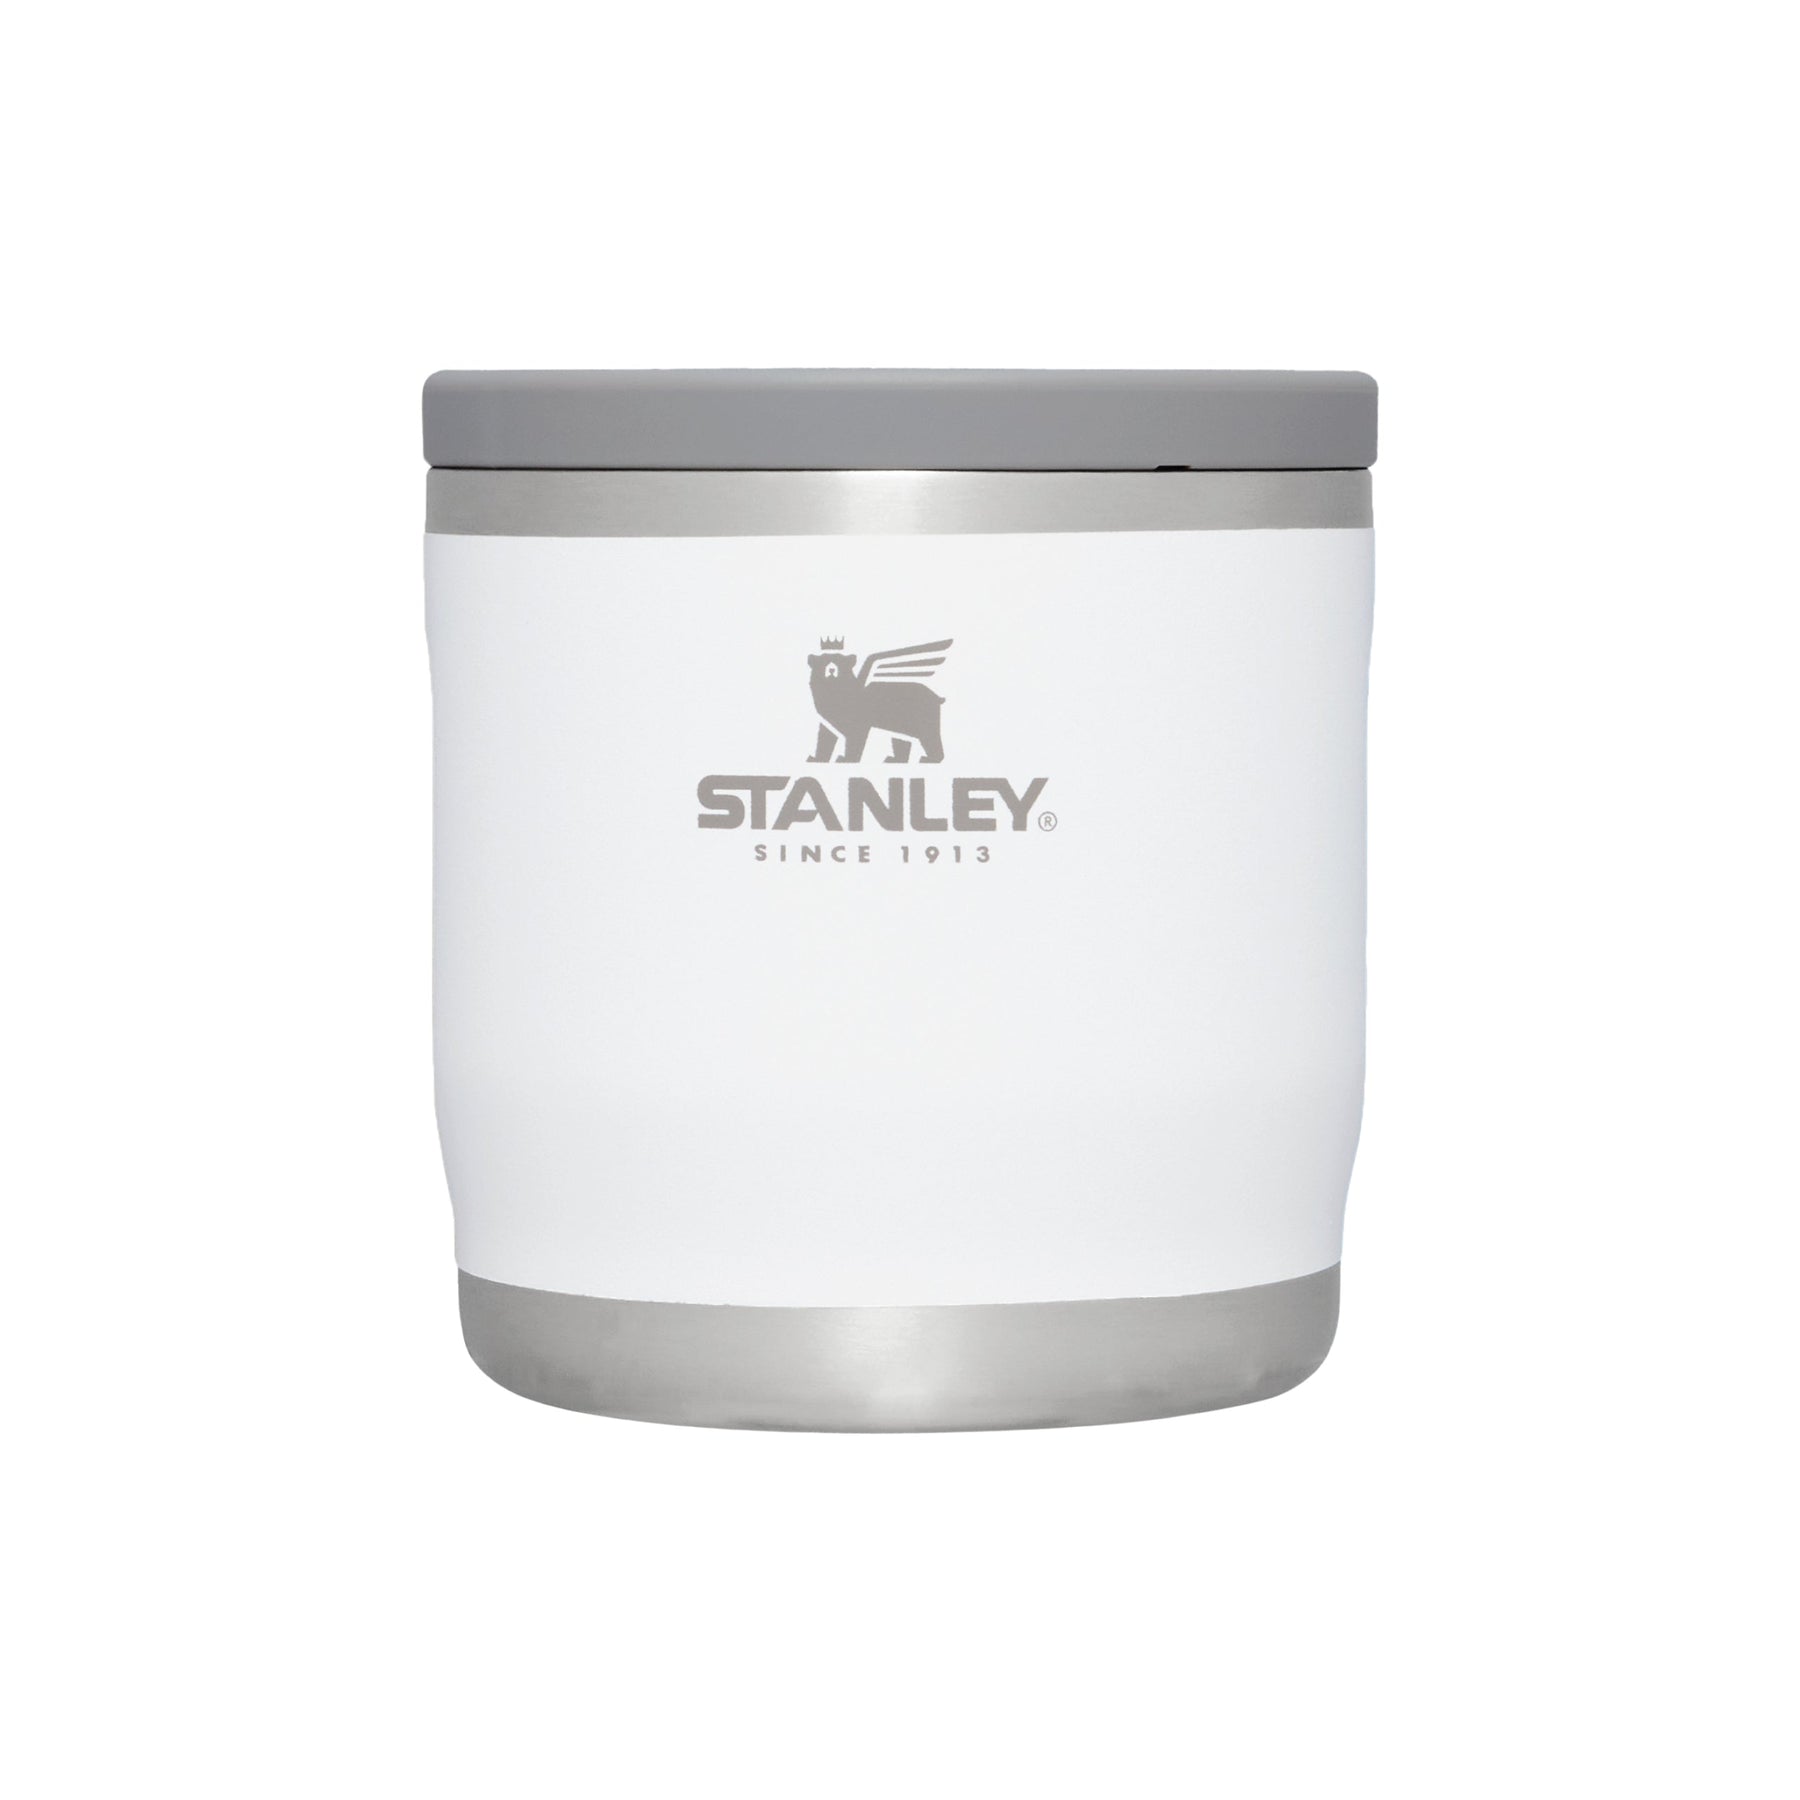 Stanley The Artisan Thermal Food Jar 0.5L Black Moon - Stanley The Artisan  Thermal Food Jar 0.5L Black Moon